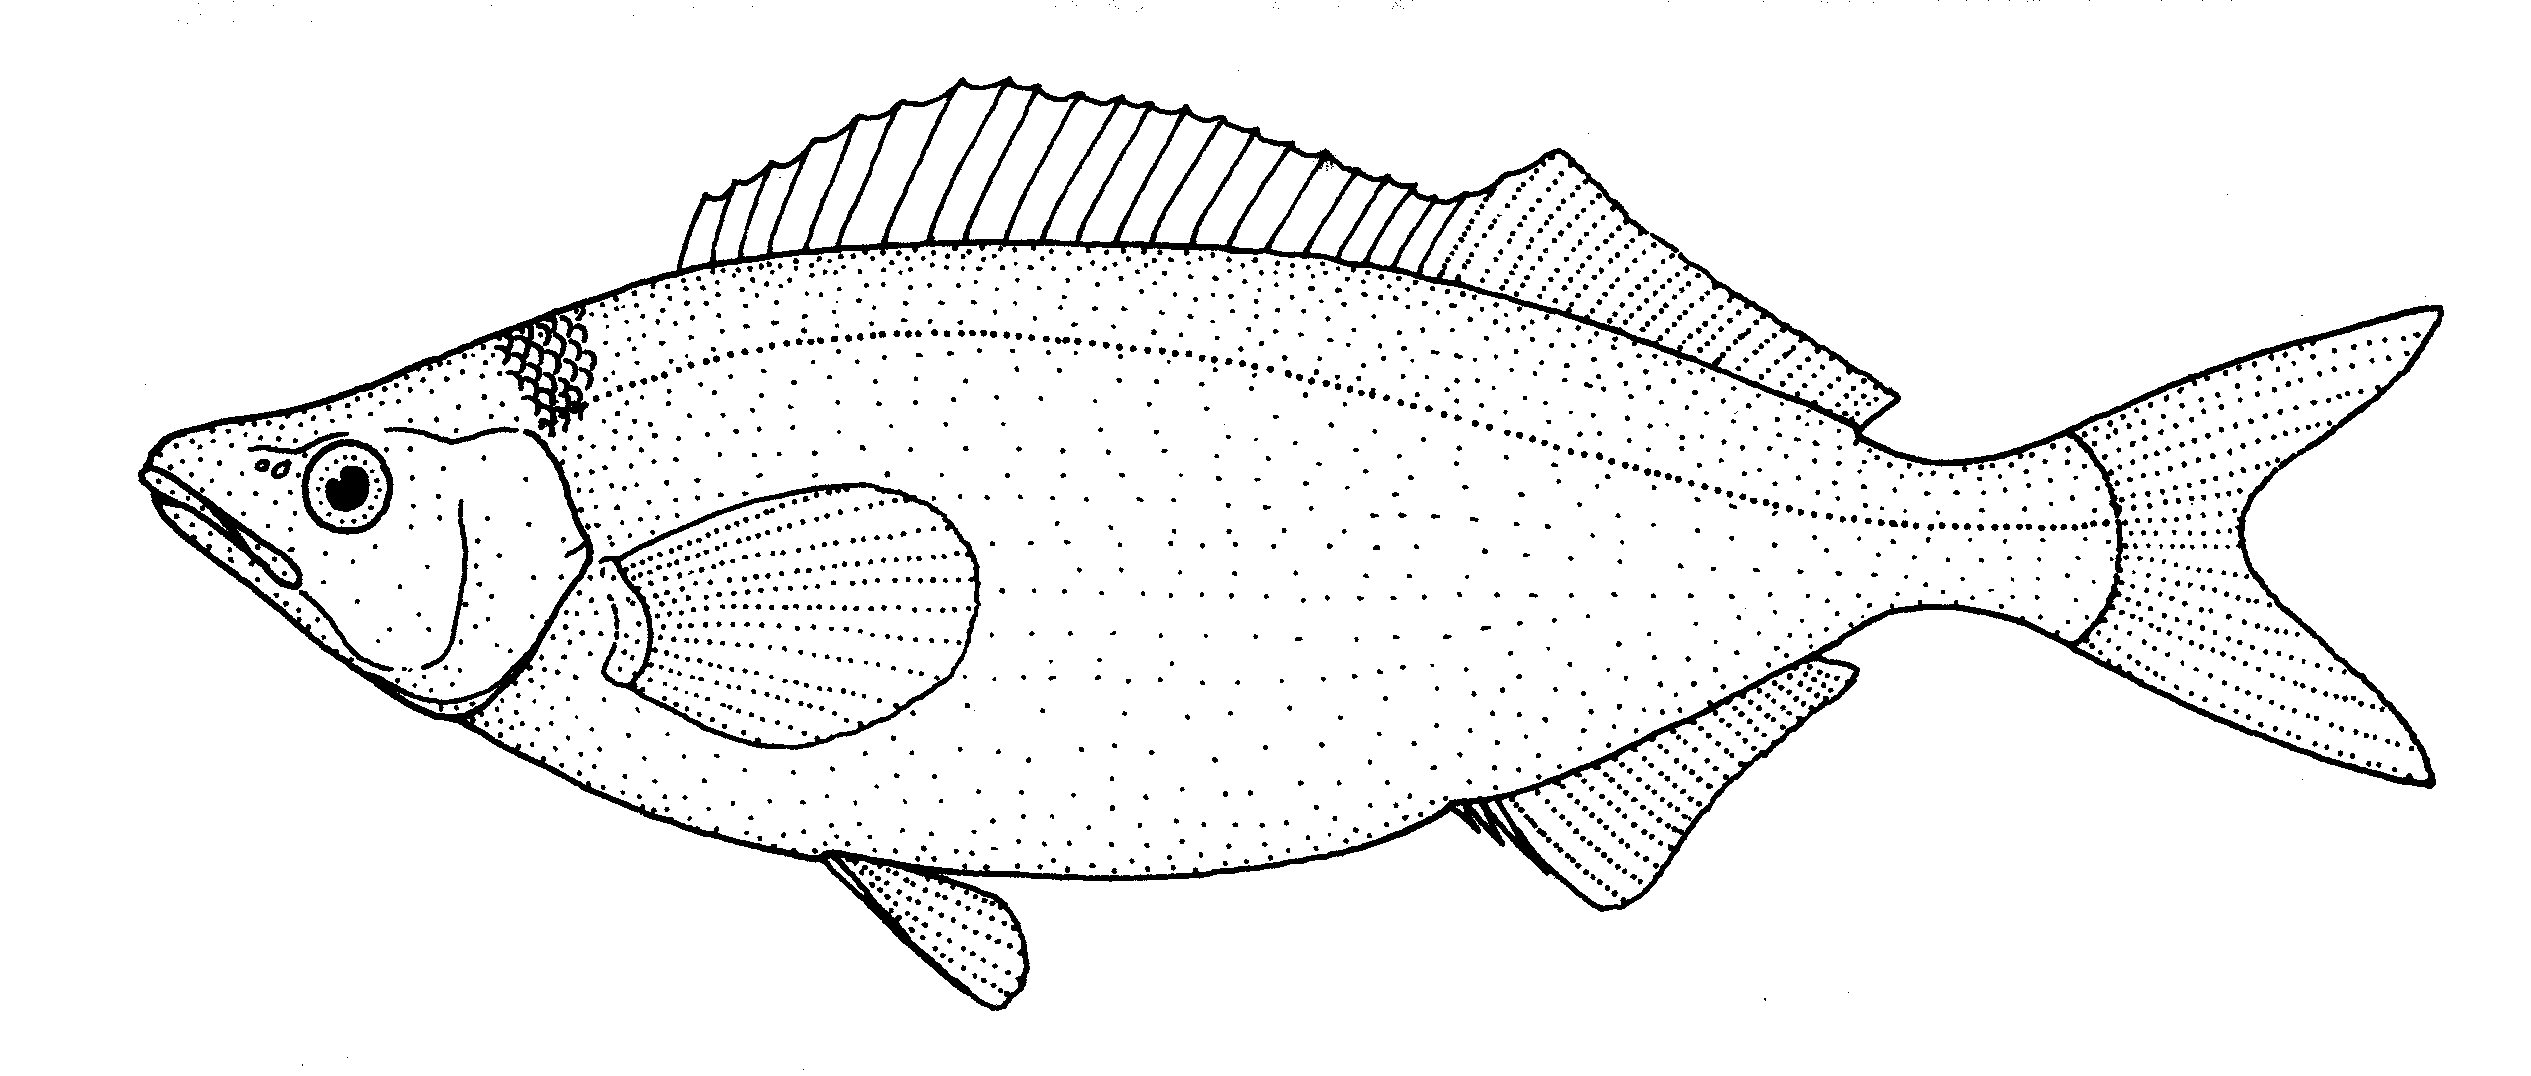 File:Mendosoma lineatum (Telescope fish) - Wikimedia Commons